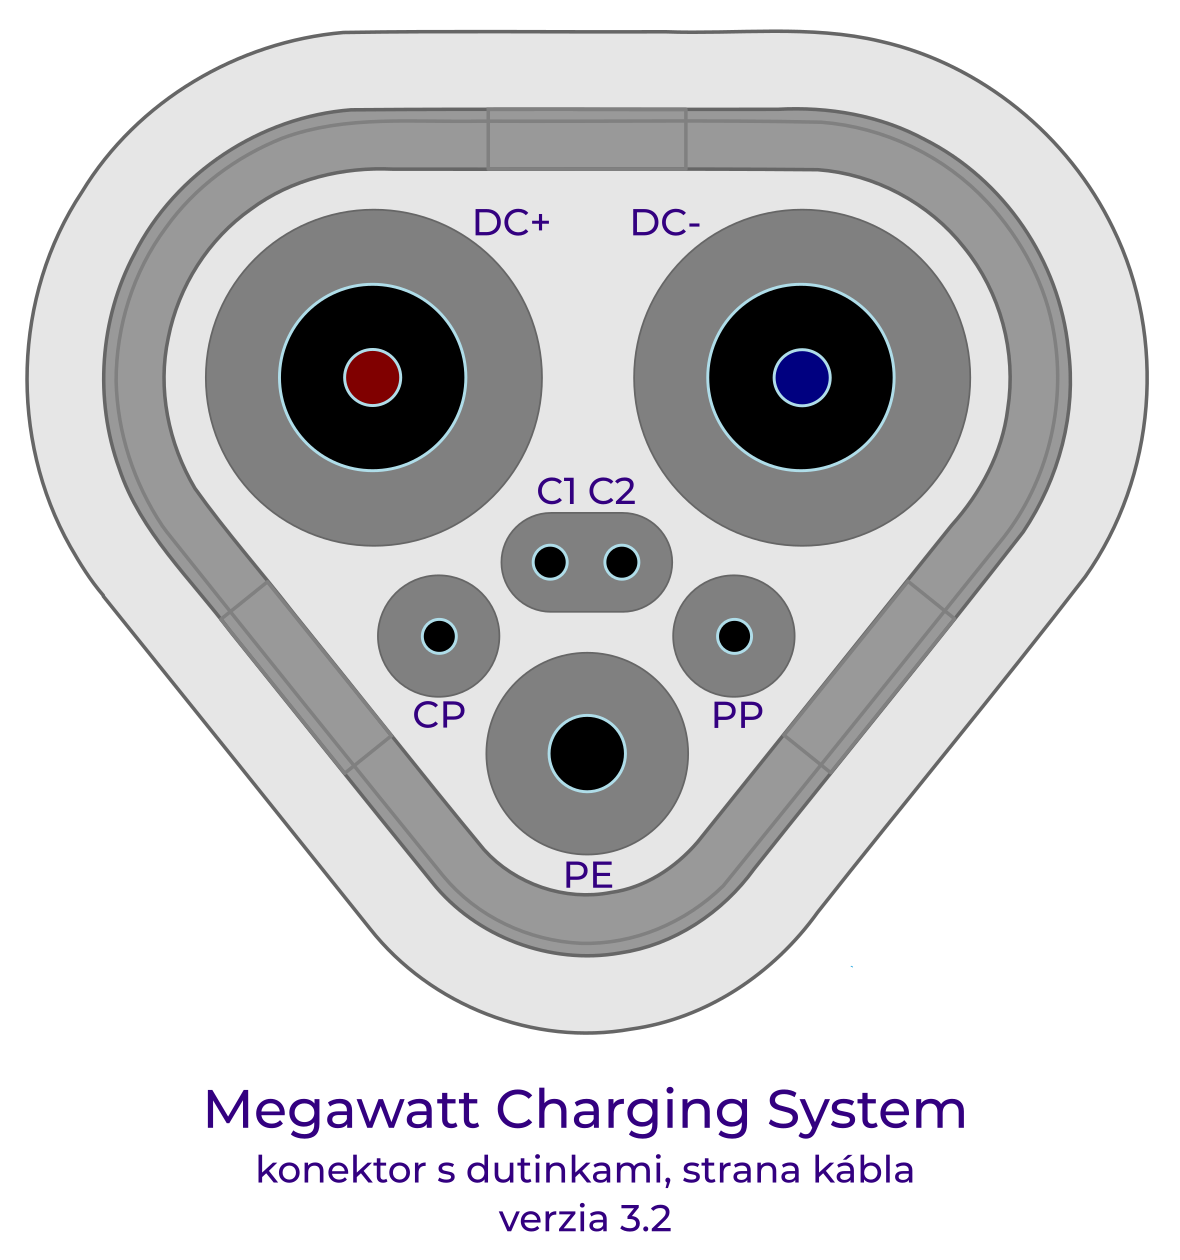 konektor Megawatt Charging System (MCS)